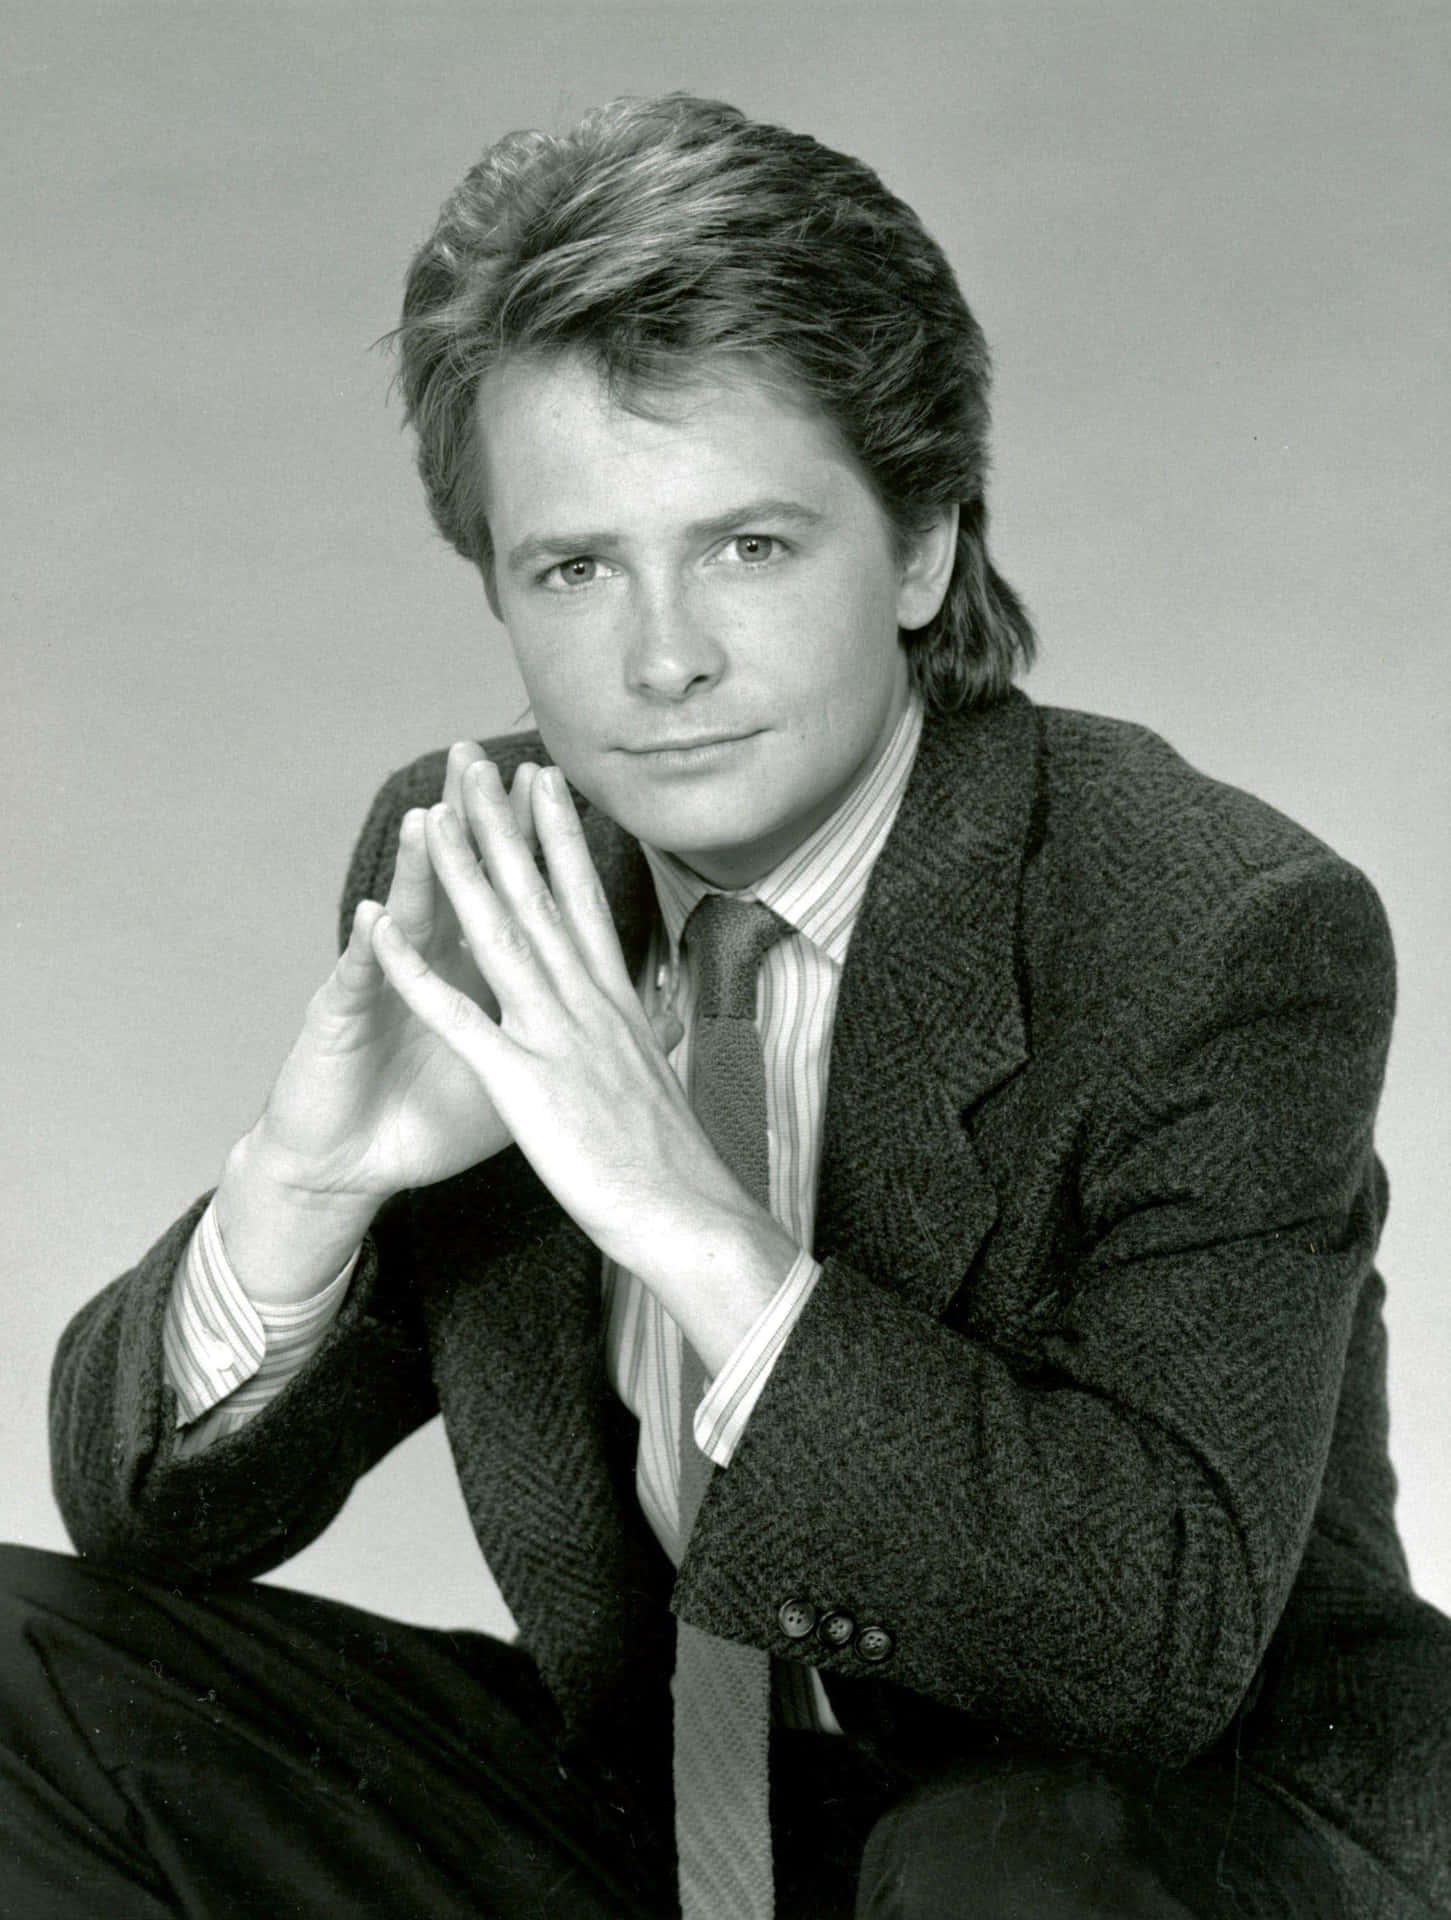 Michael J. Fox, Actor And Activist